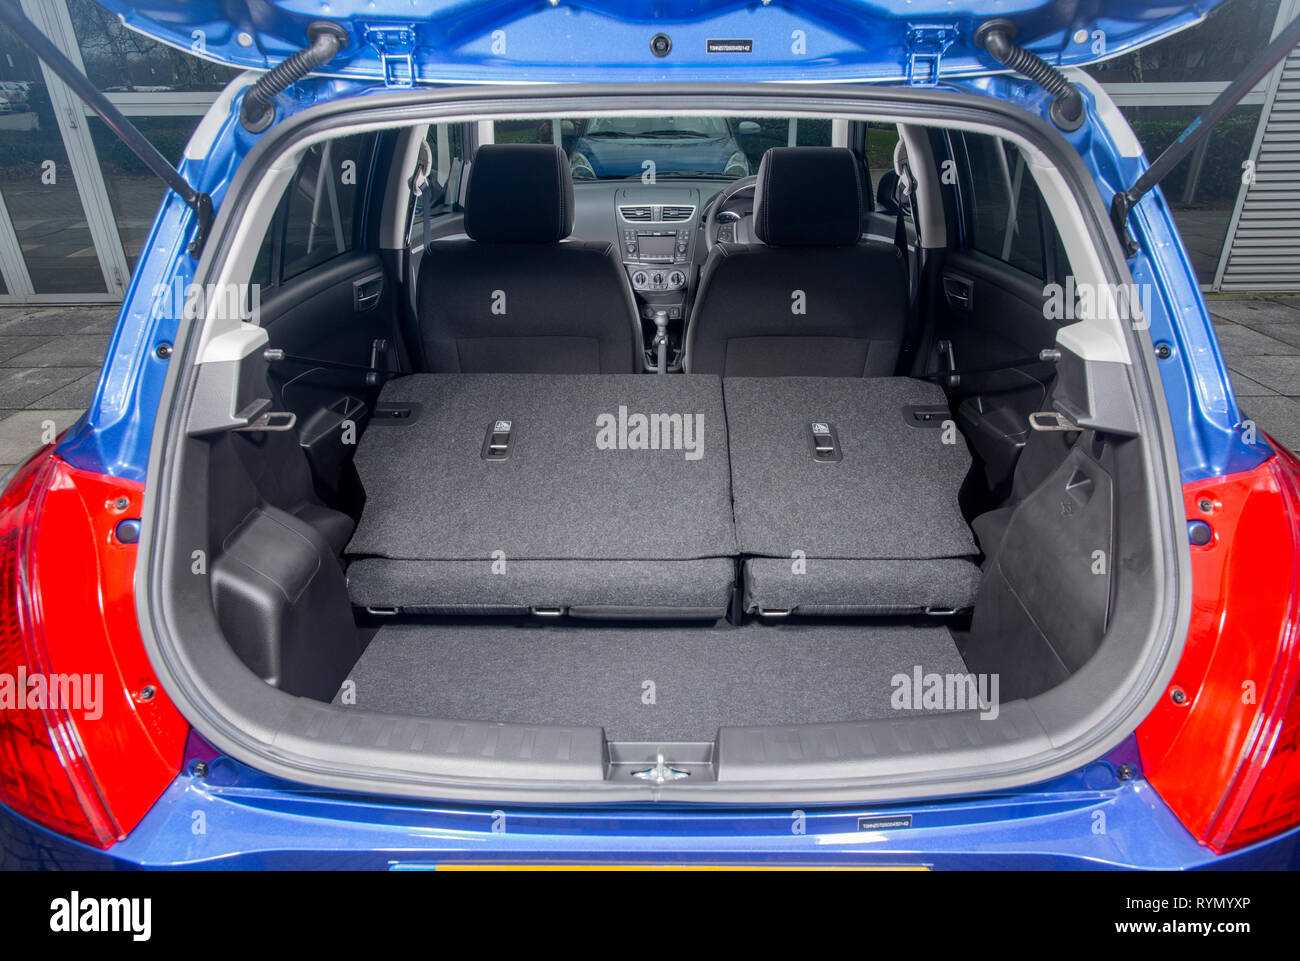 2014 Suzuki Swift SZL hot hatch compact car Stock Photo